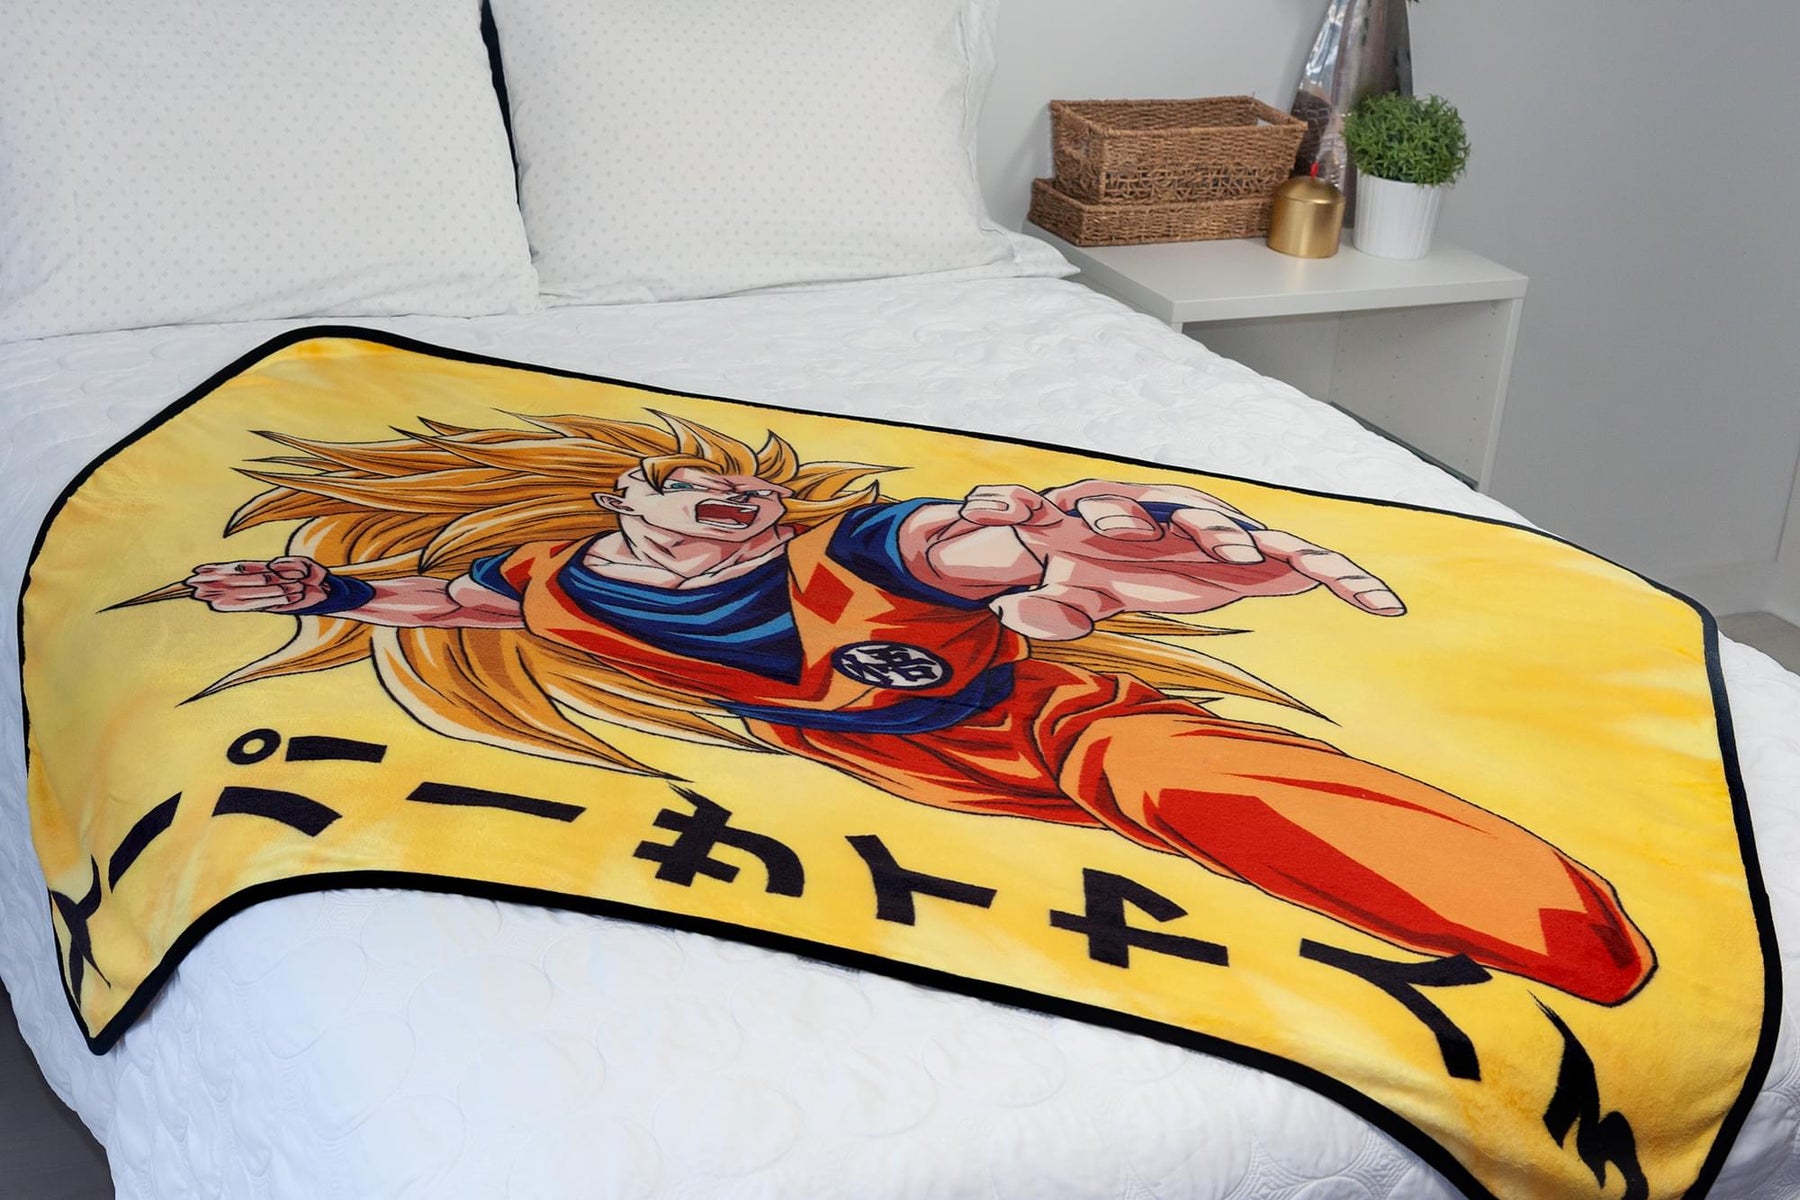 Dragon Ball Z Goku Super Saiyan 3 Japanese Fleece Throw Blanket | 60 x 45 Inches